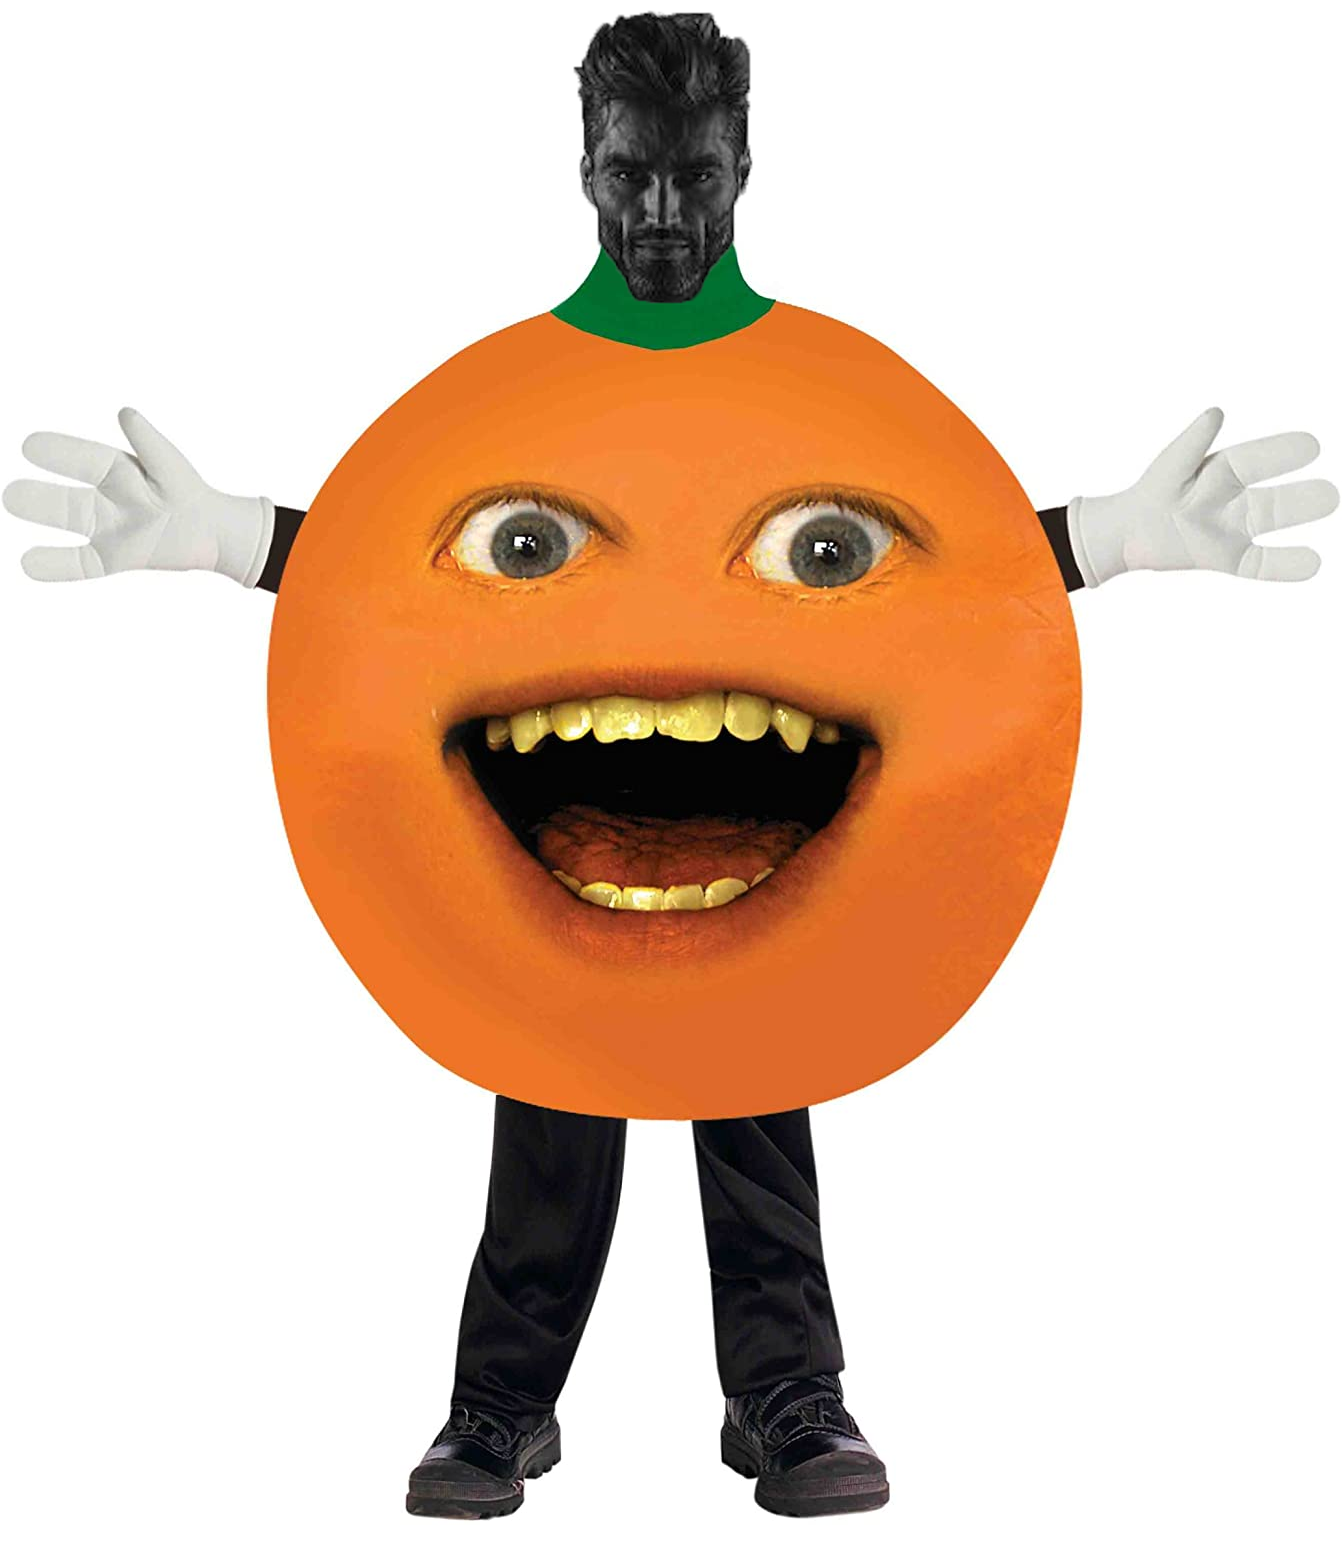 Gigachad wearing an annoying orange costume Blank Meme Template